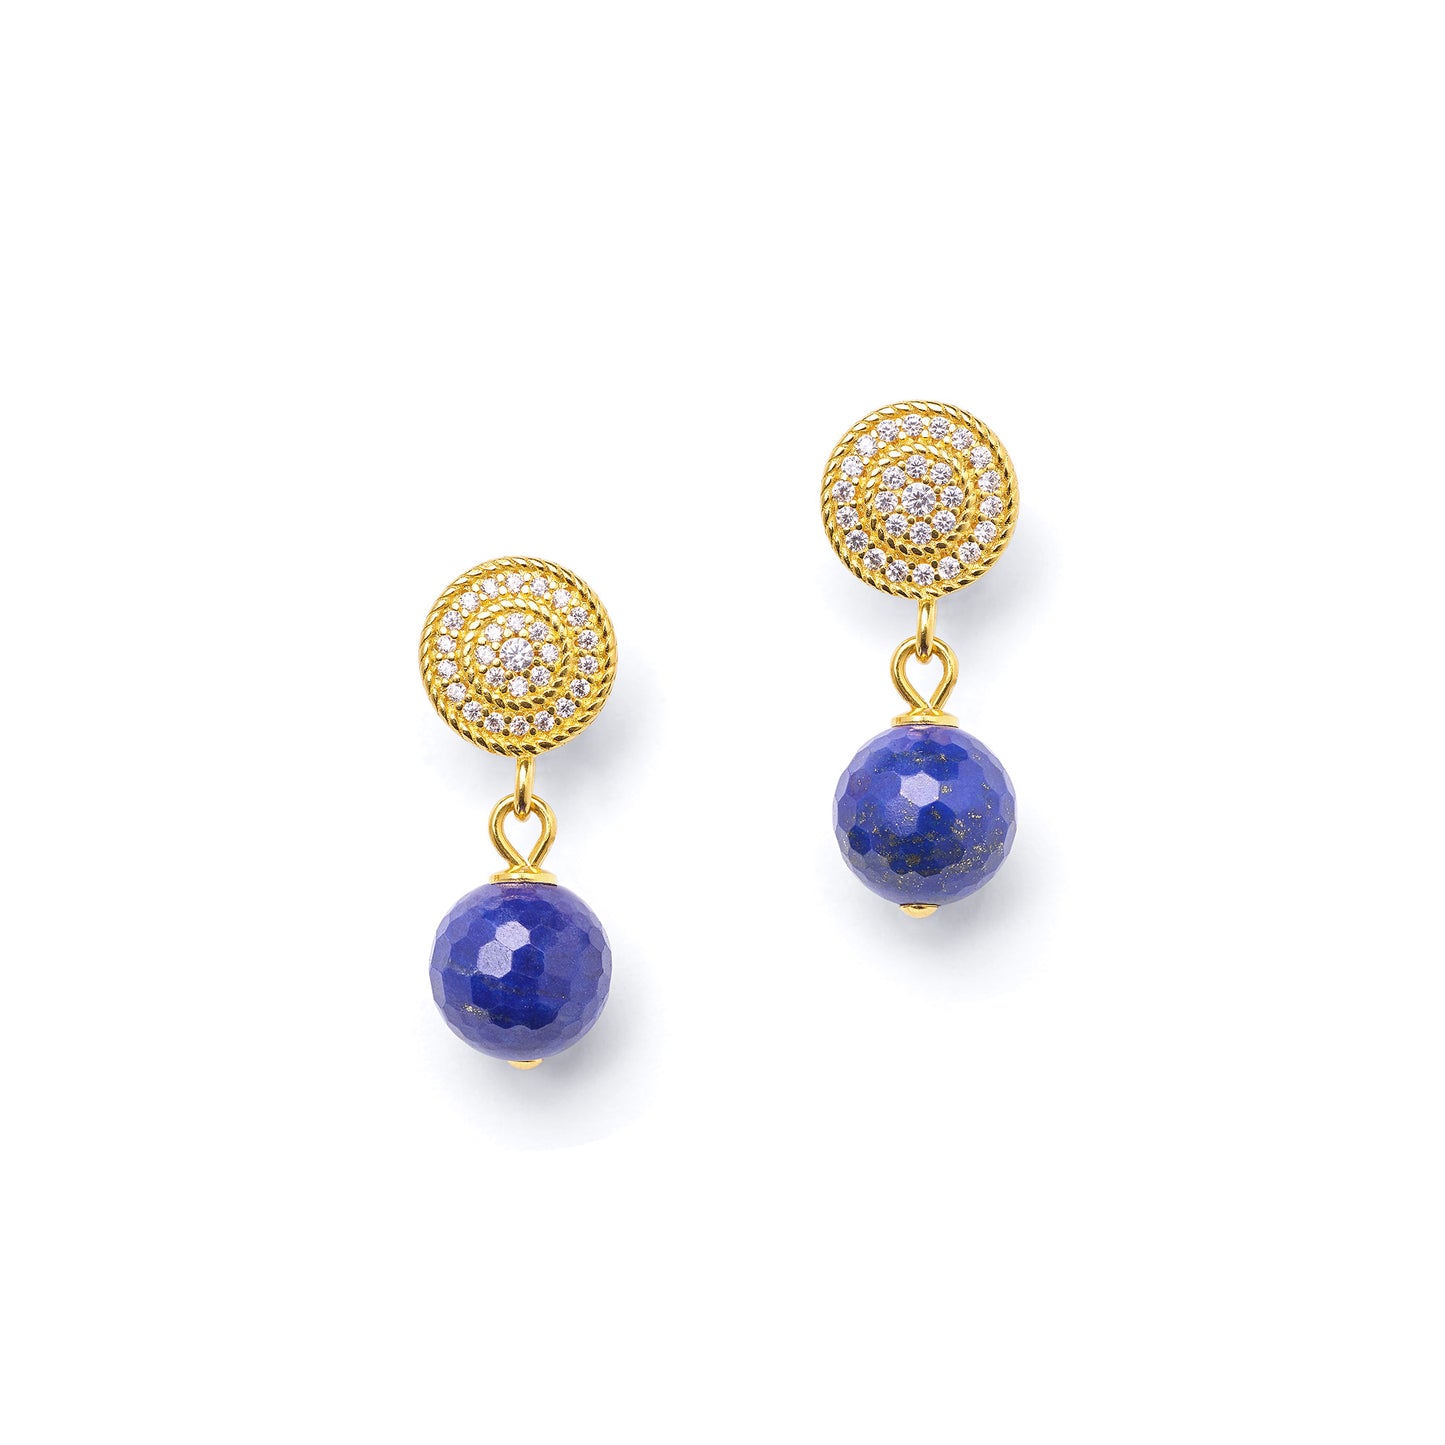 Bernd Wolf Collection "Verina" Blue Lapis Earrings